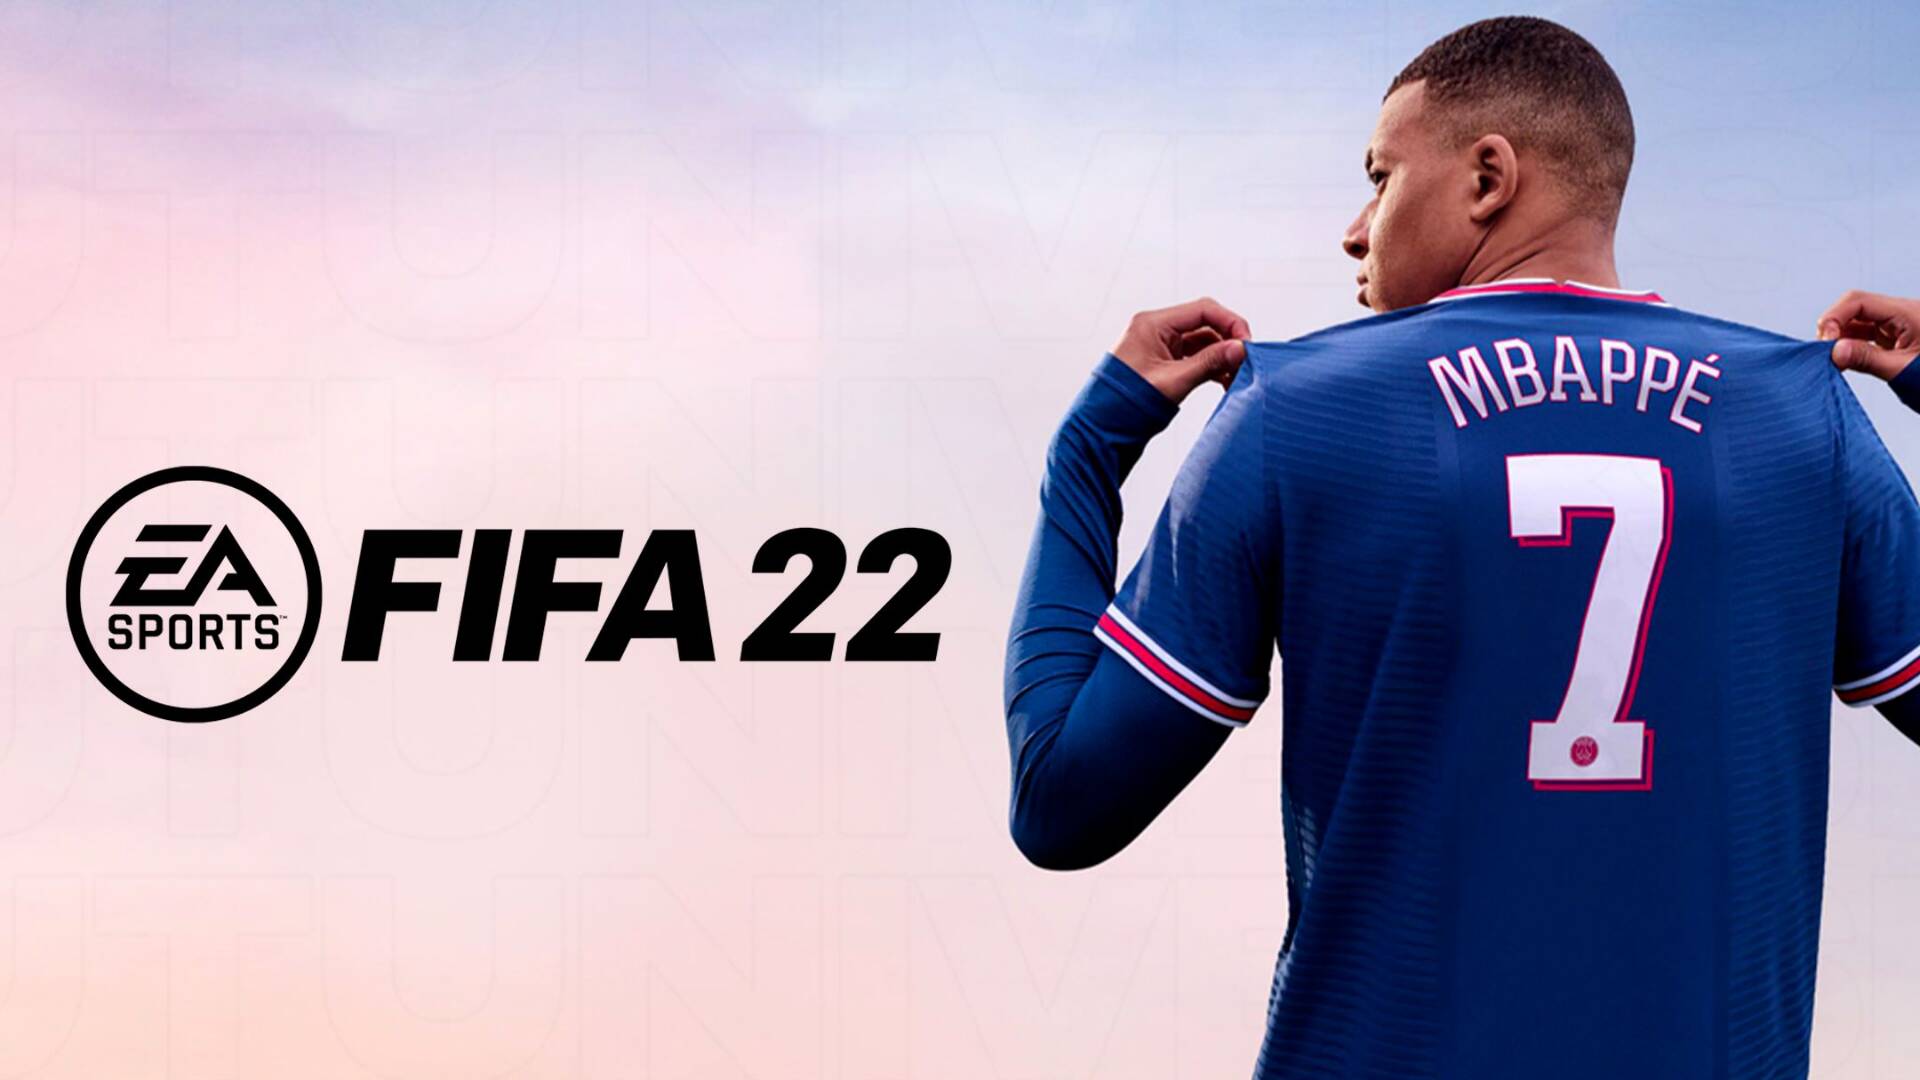 FIFA22 Poster